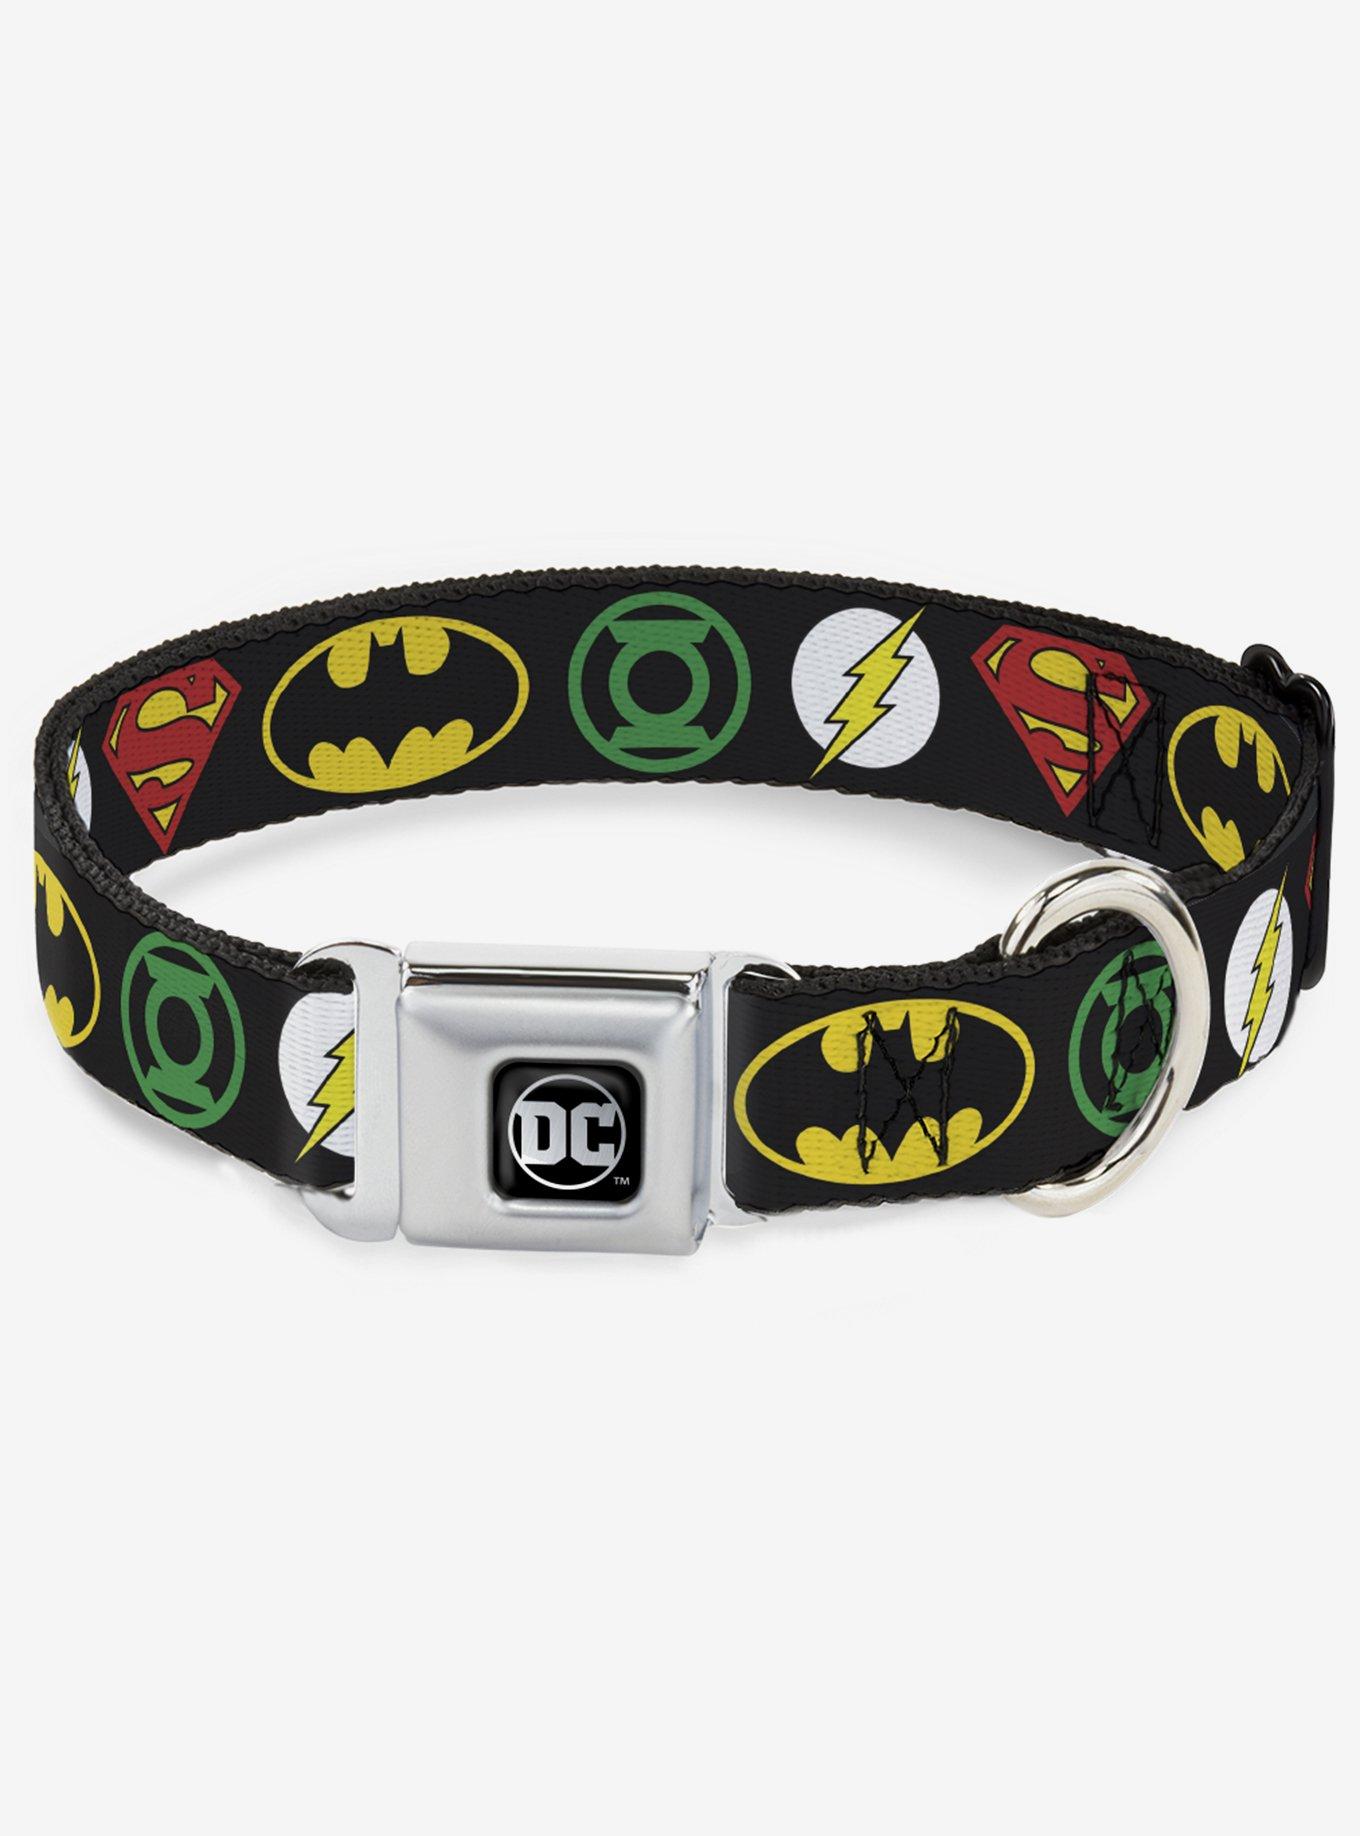 DC Comics Justice League Superhero Logos Seatbelt Buckle Dog Collar, MULTICOLOR, hi-res